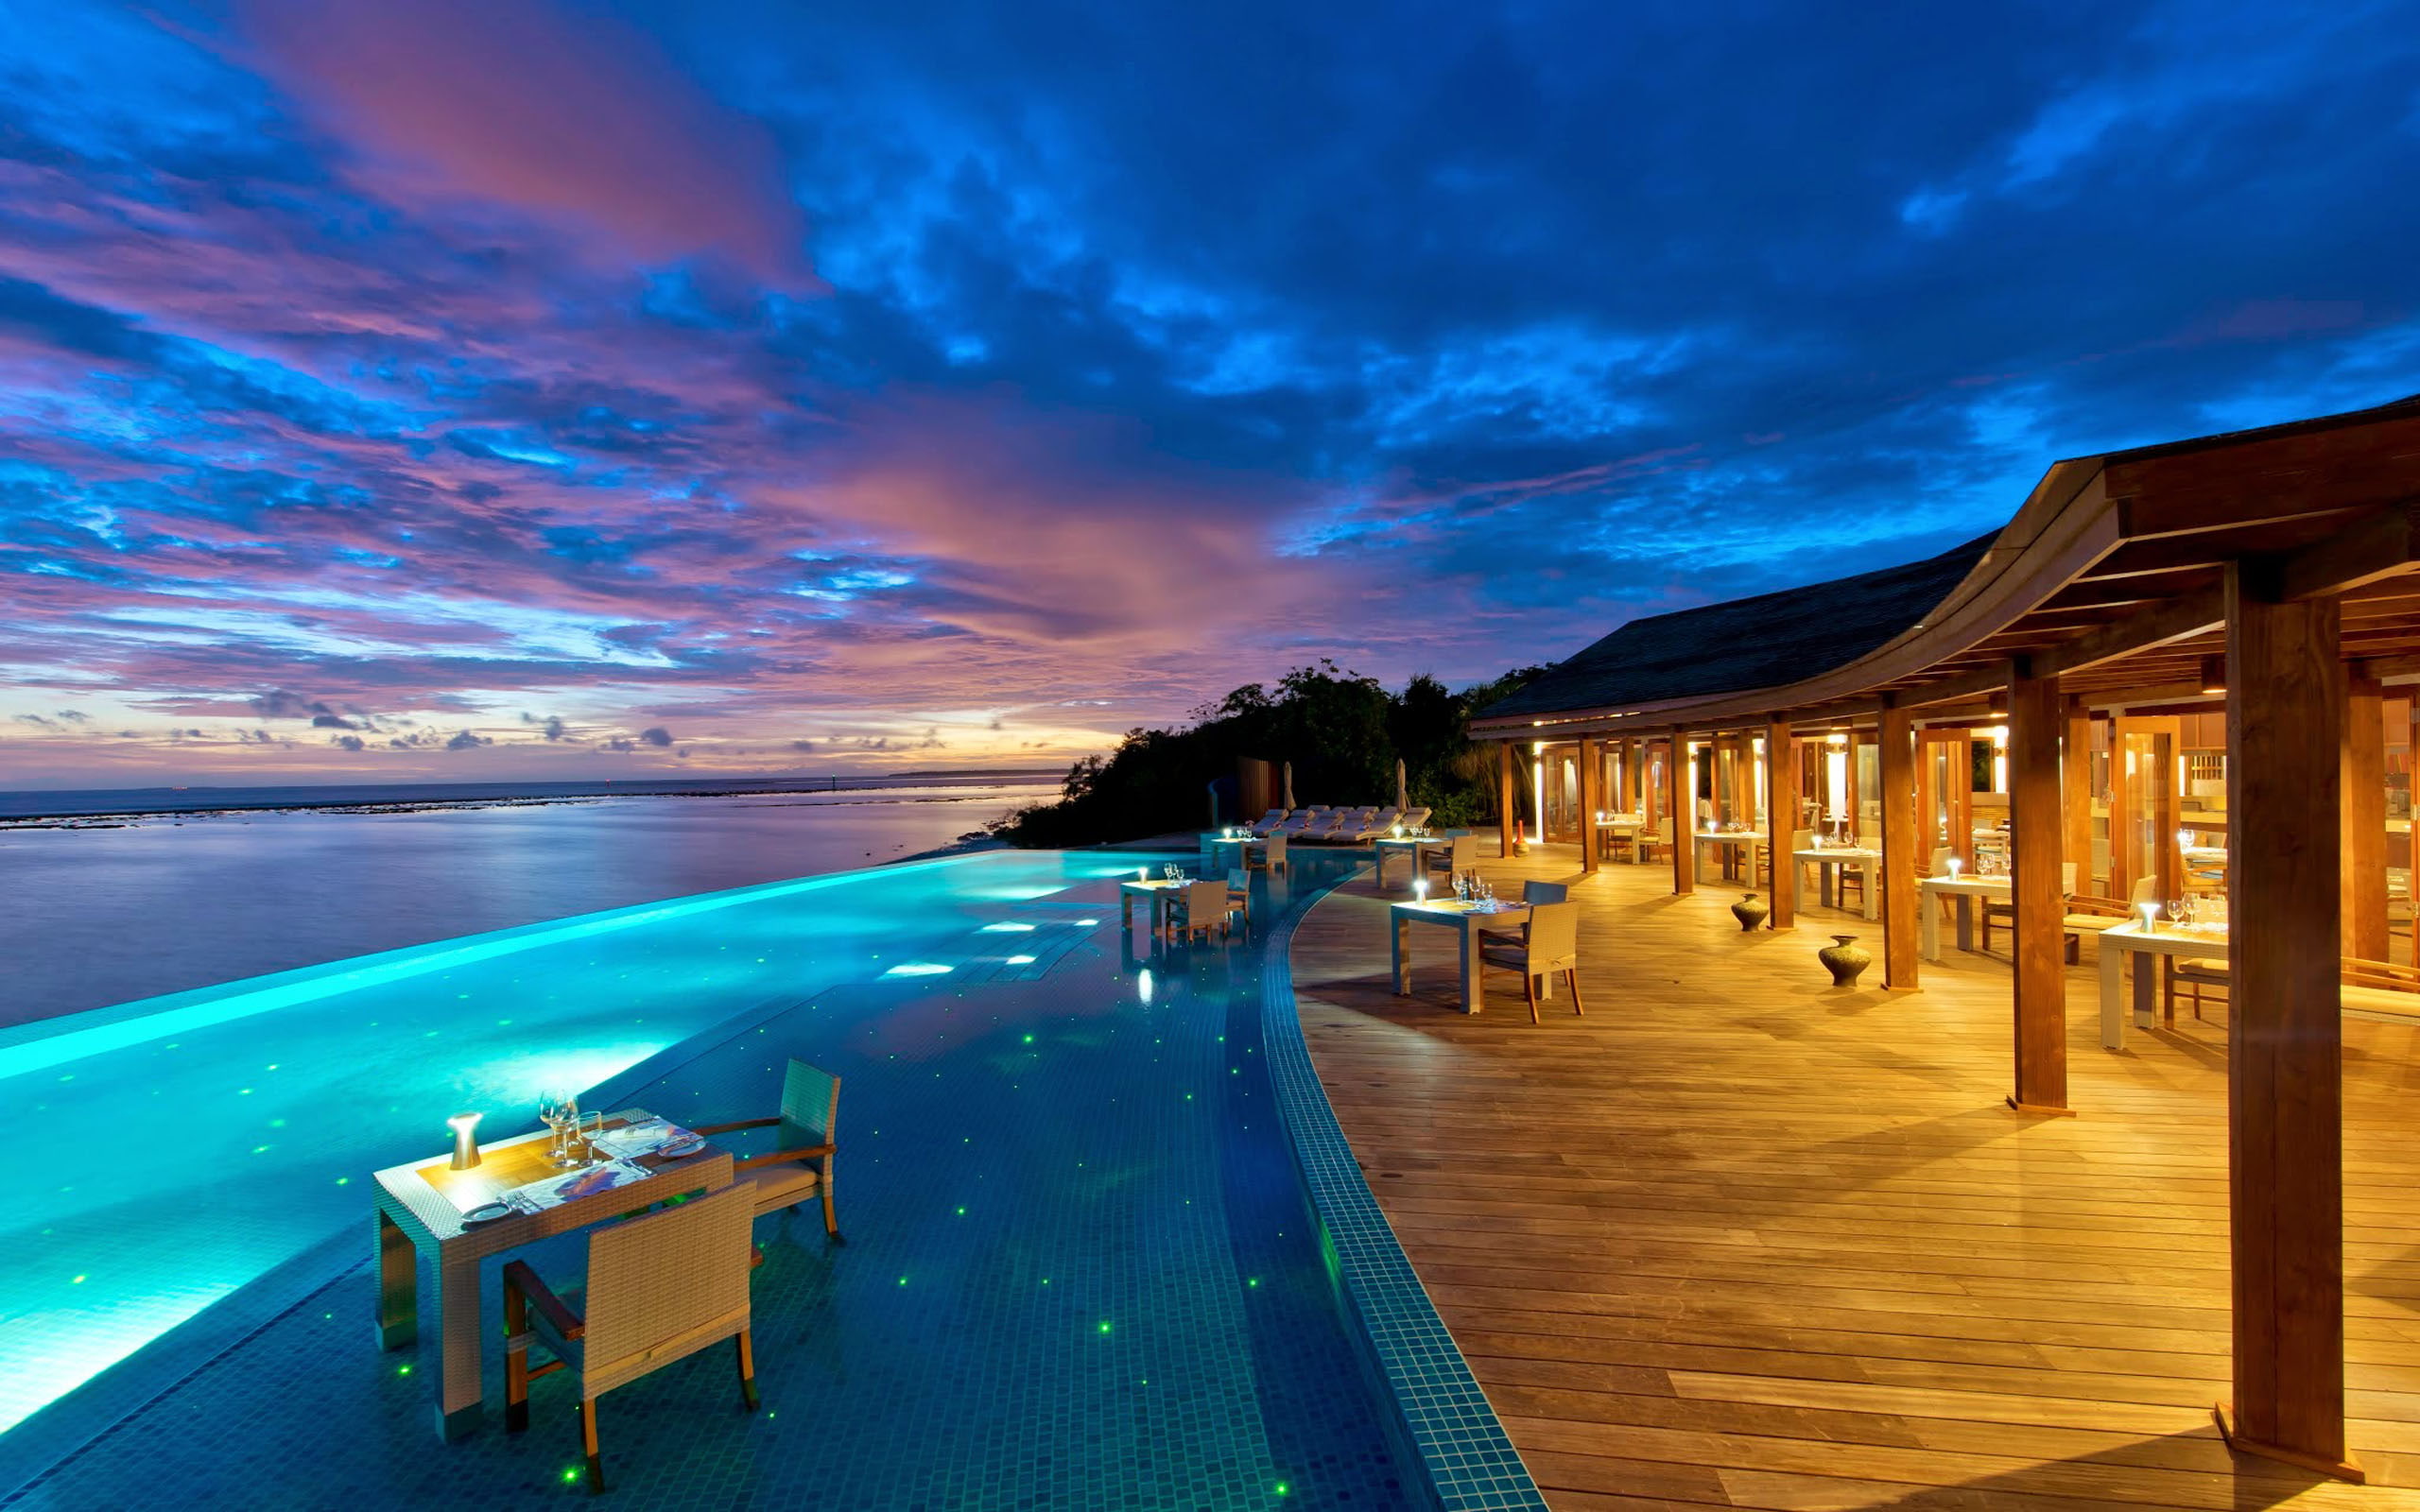 Maldives Tropical Islands Hideaway Beach Resort & Spa South Asia Indian Ocean Hd Wallpapers 2560×1600